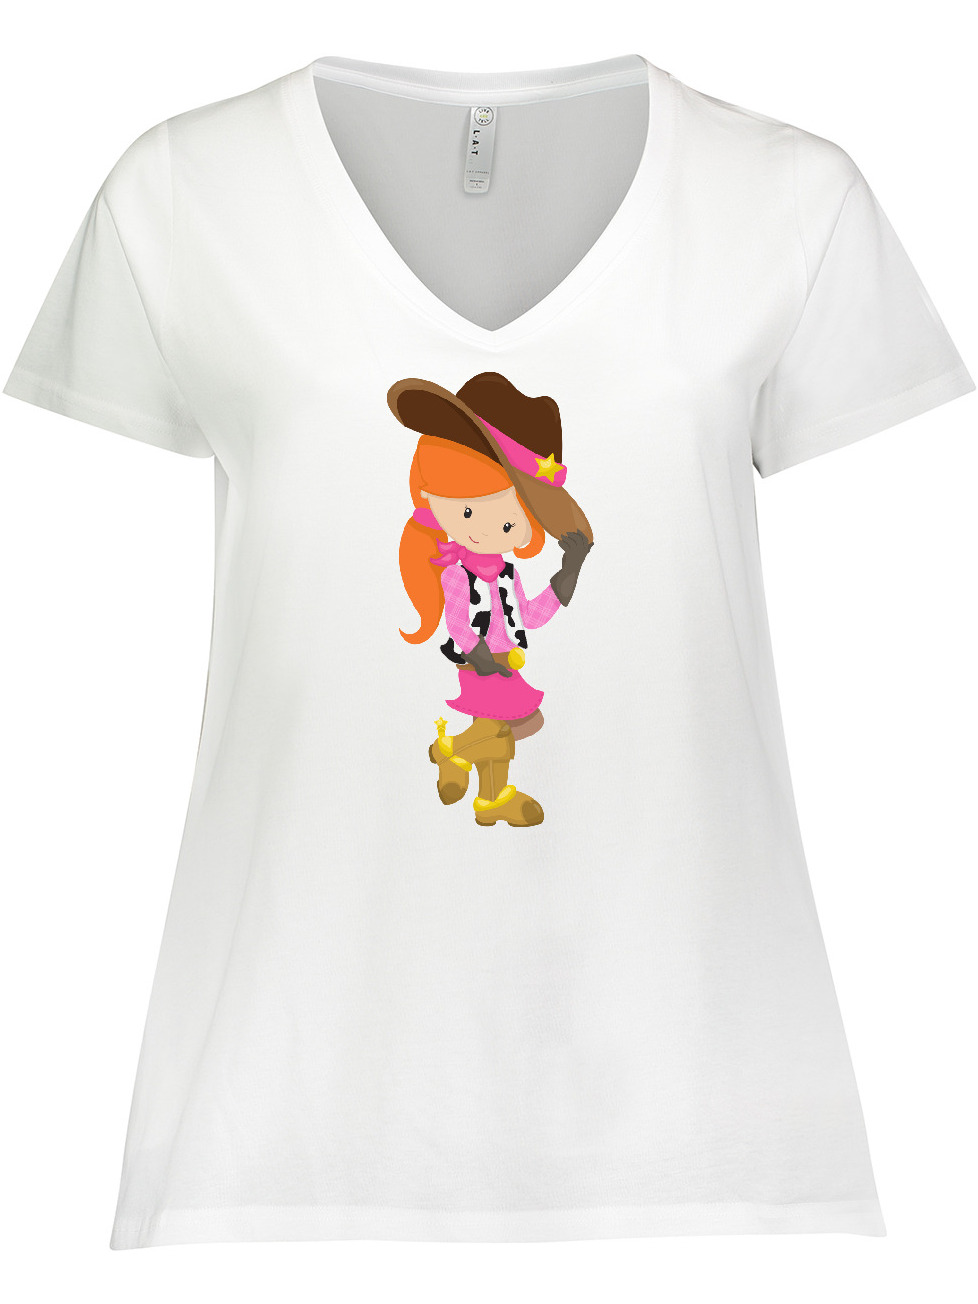 Inktastic Cowboy Girl, Girl With Cowboy Hat, Orange Hair Women's Plus Size V-Neck T-Shirt - image 1 of 4